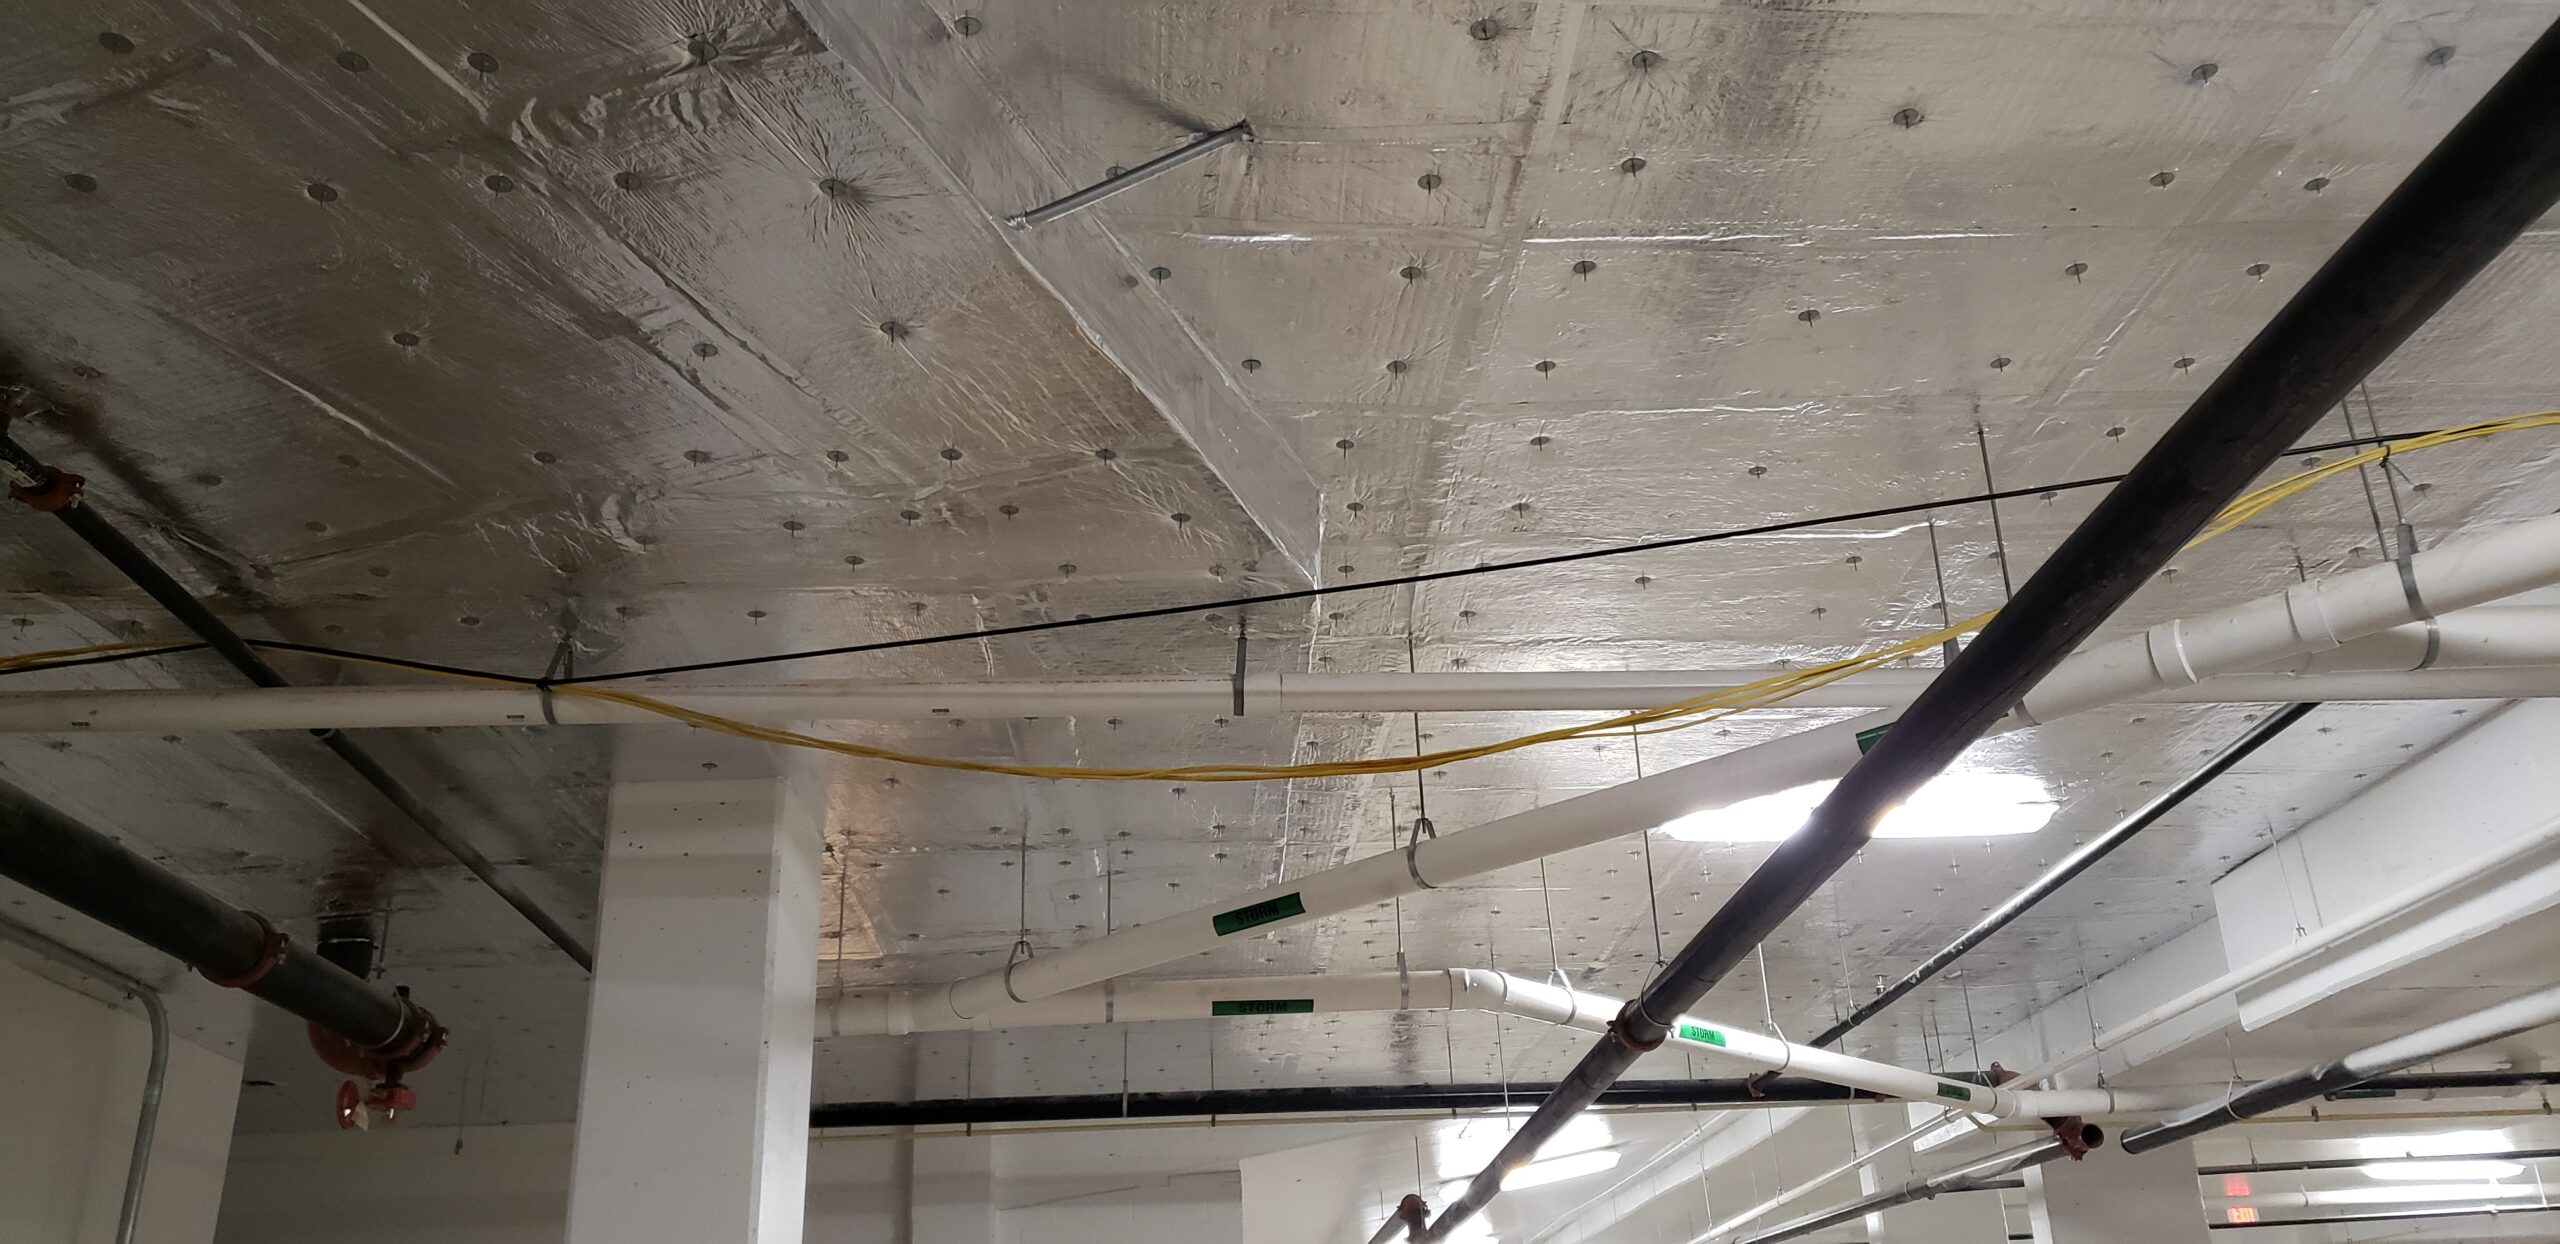 Parking garage ceiling insulated with rigid foam board.